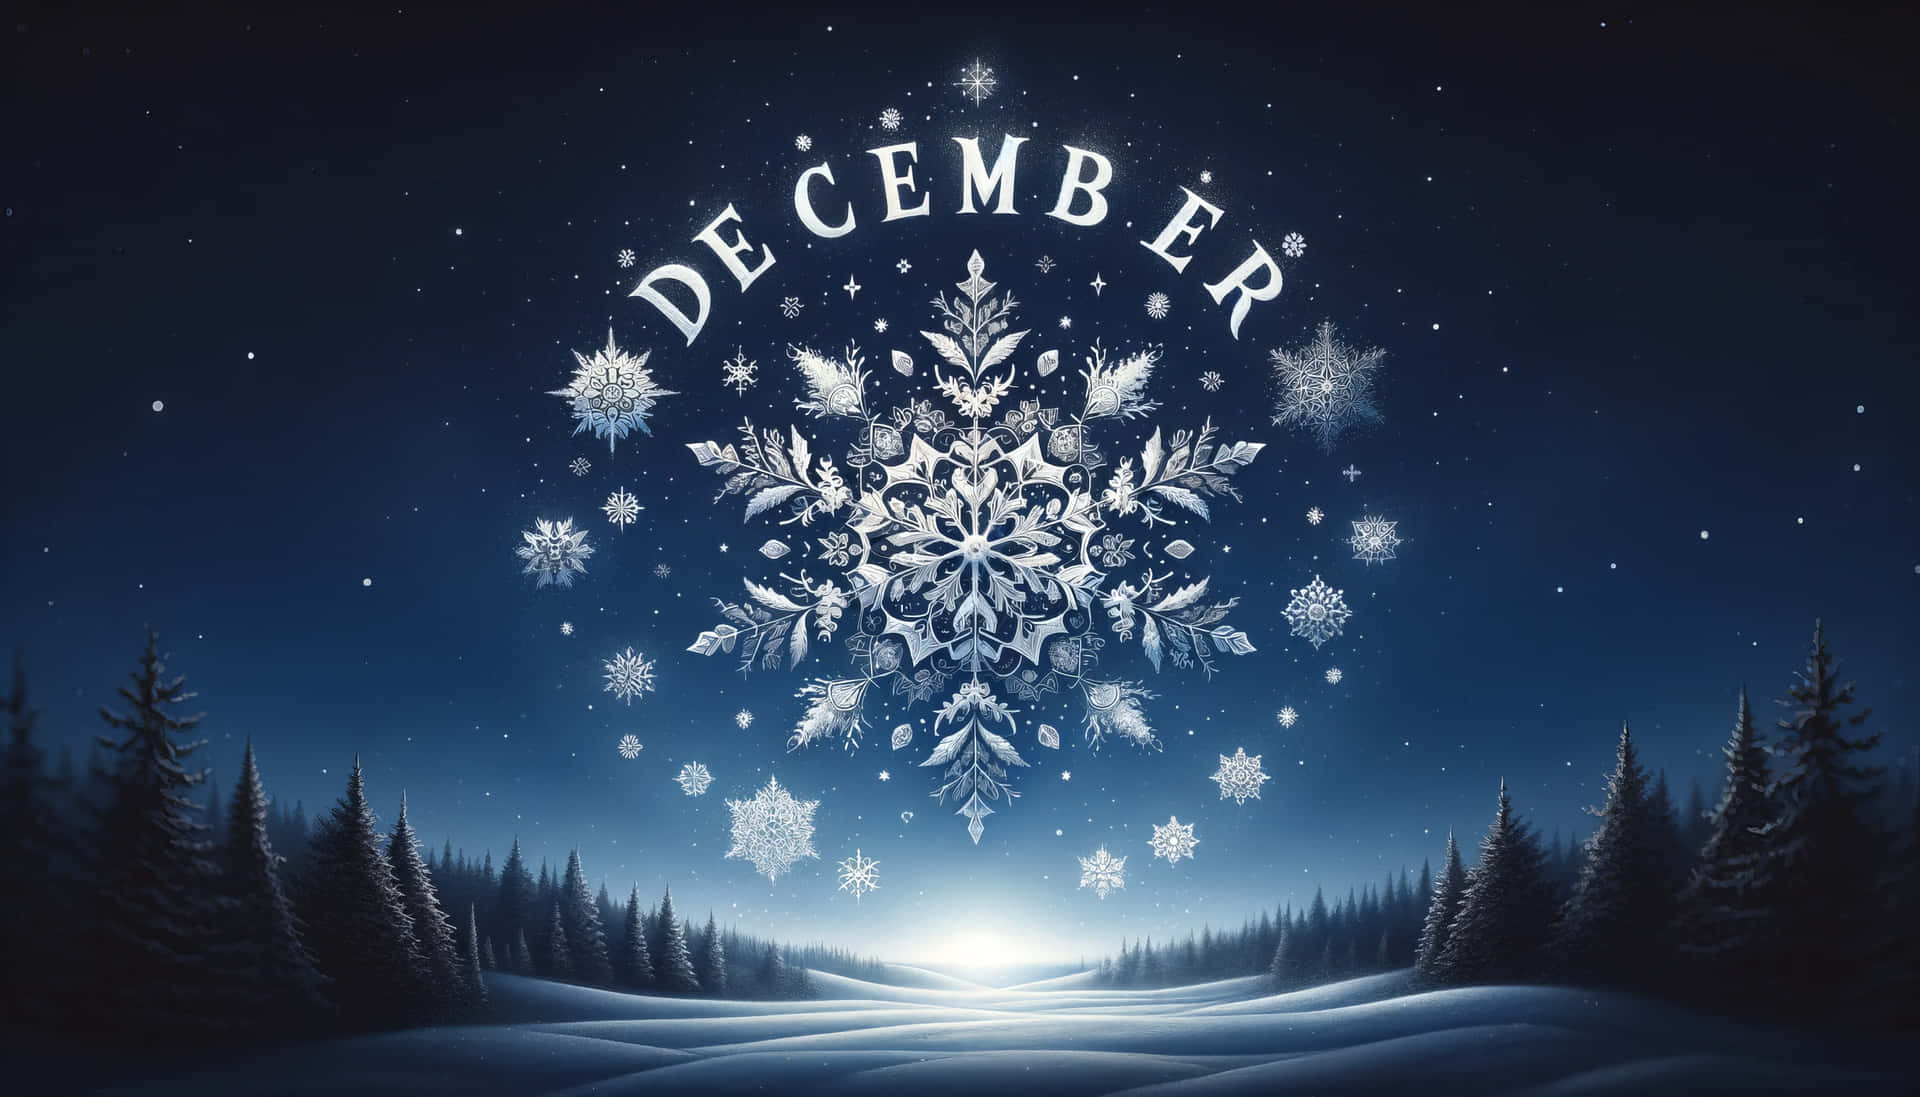 December Winter Night Snowflake Design Wallpaper